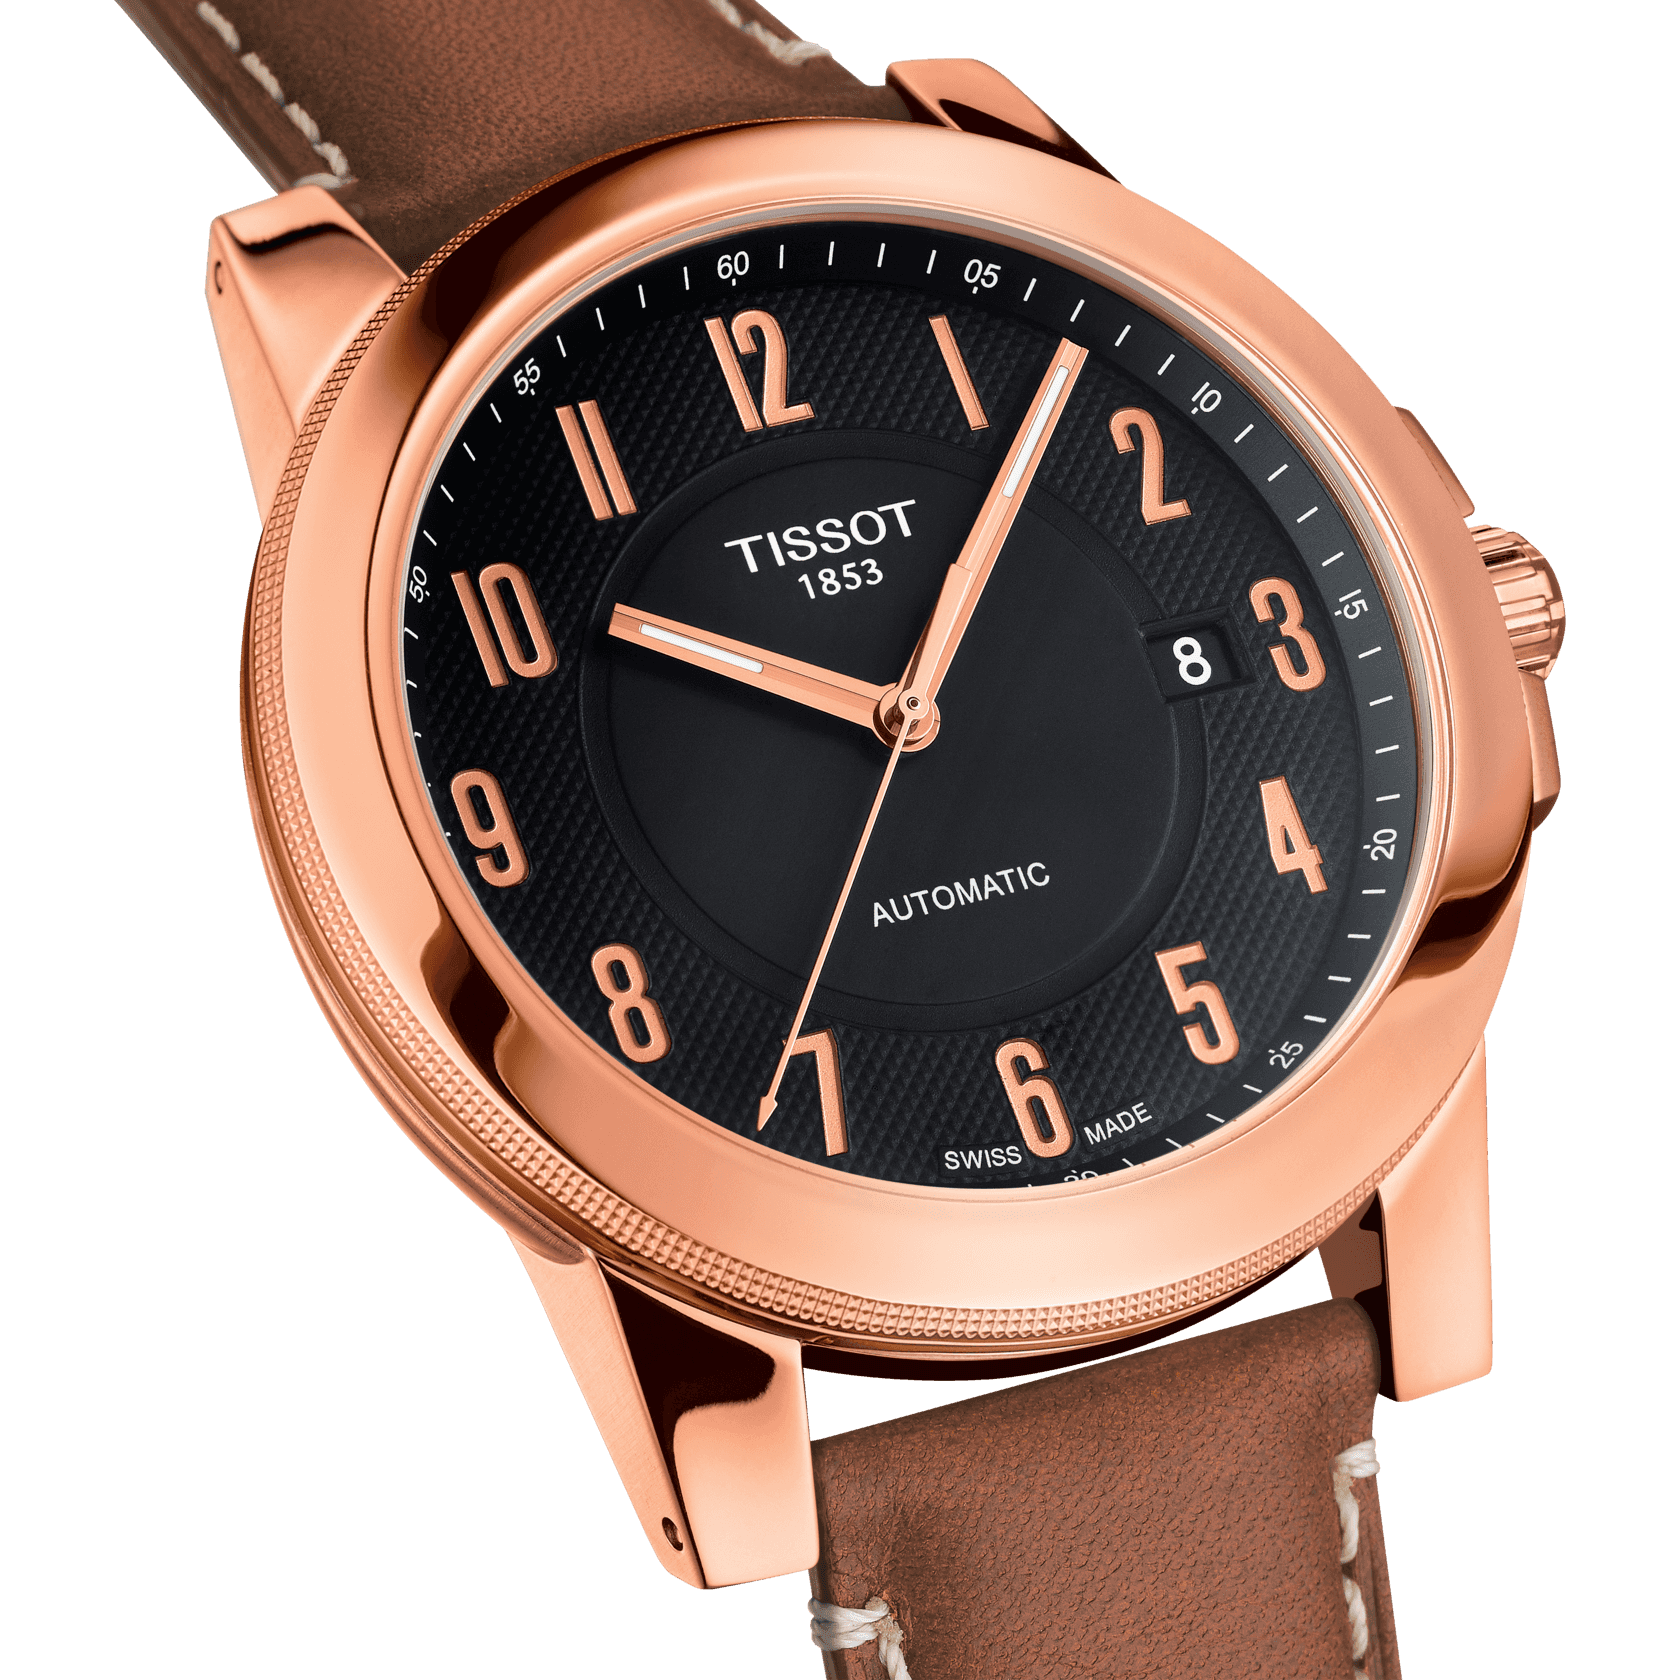 Replicas Titoni Watch